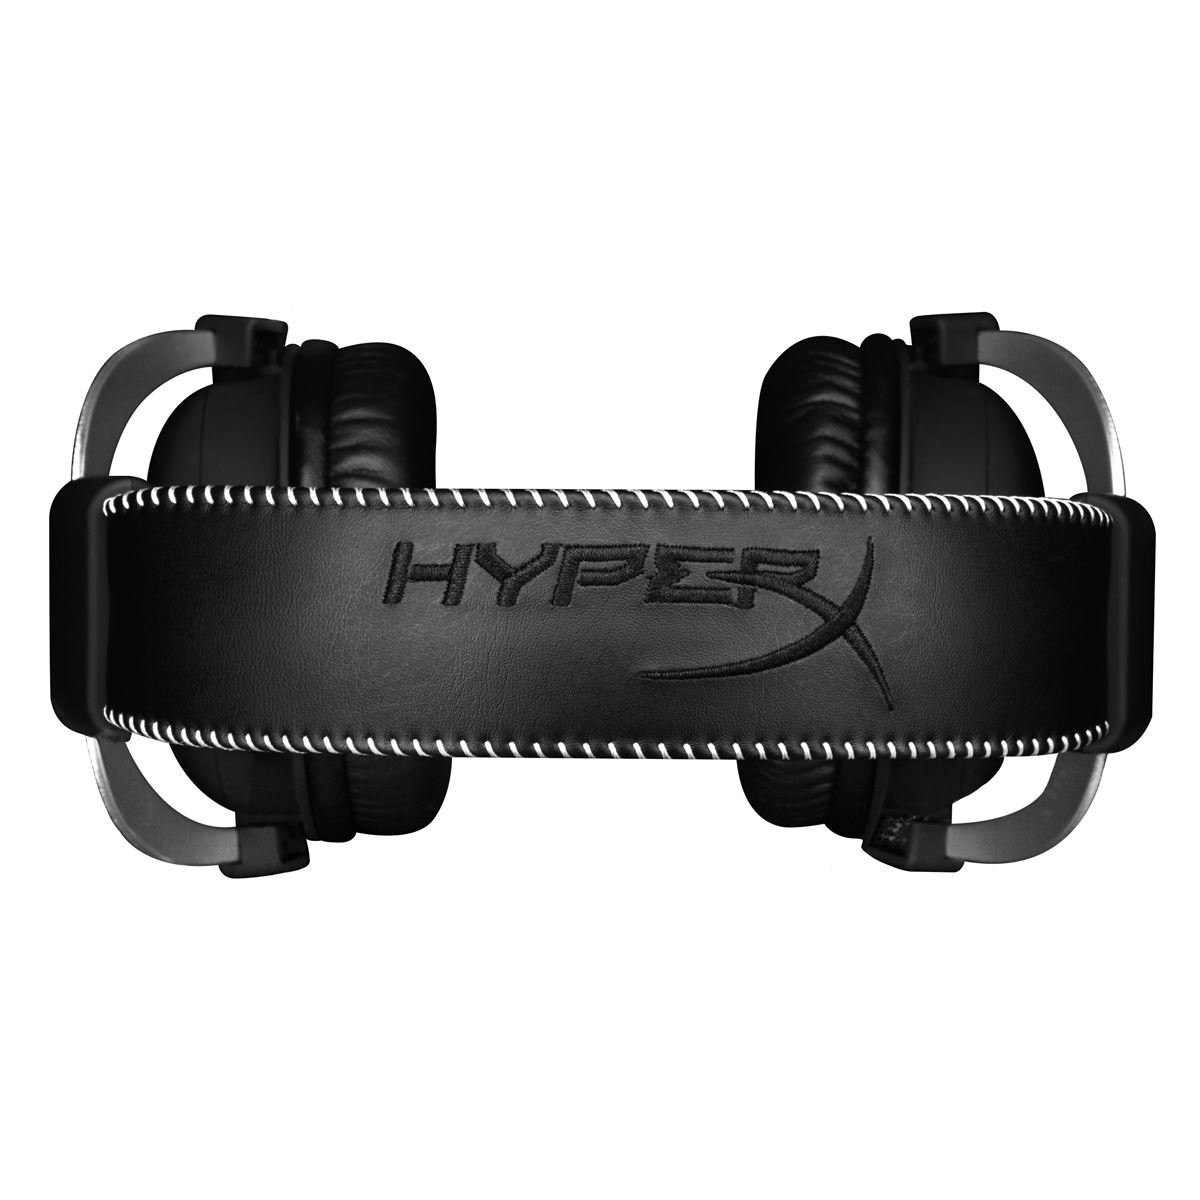 Audifonos Hyperx Cloudx - Gaming Headset Xbox One